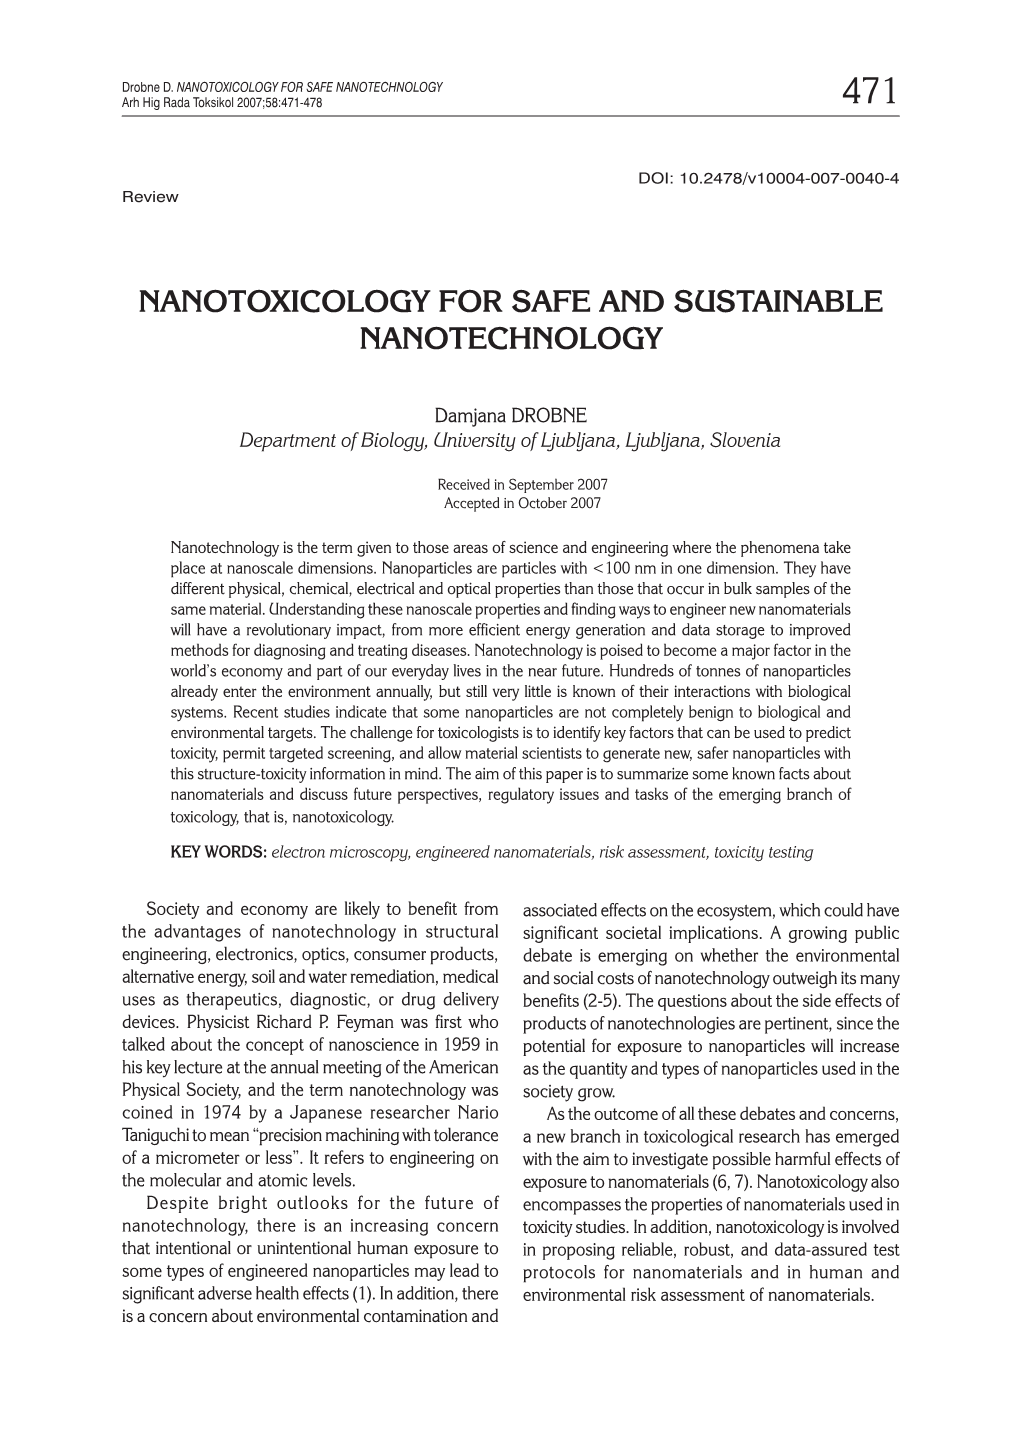 Nanotoxicology for Safe and Sustainable Nanotechnology